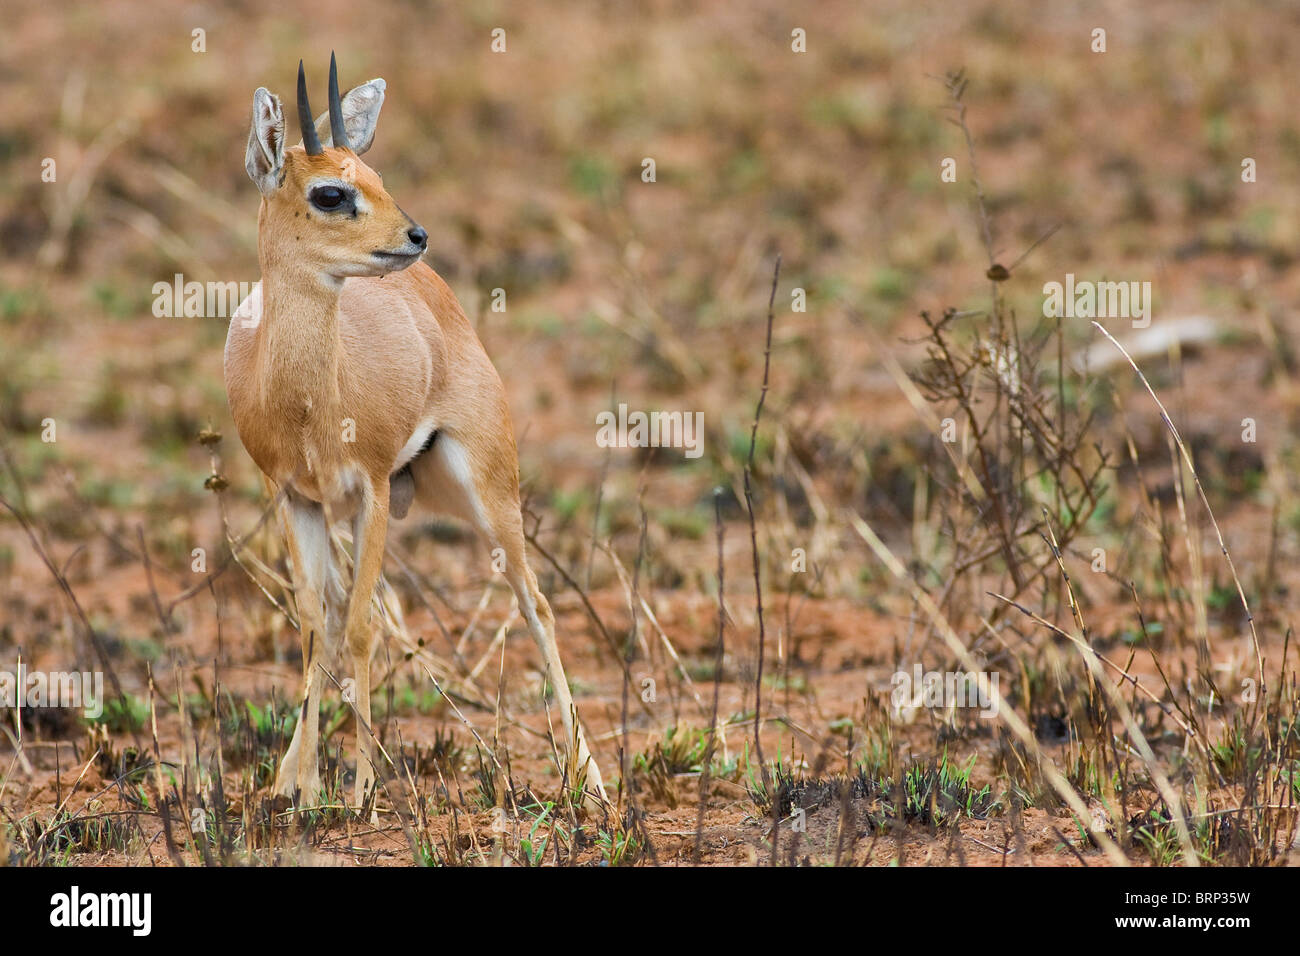 Steenbok in piedi in semi-zona arida cercando alert Foto Stock